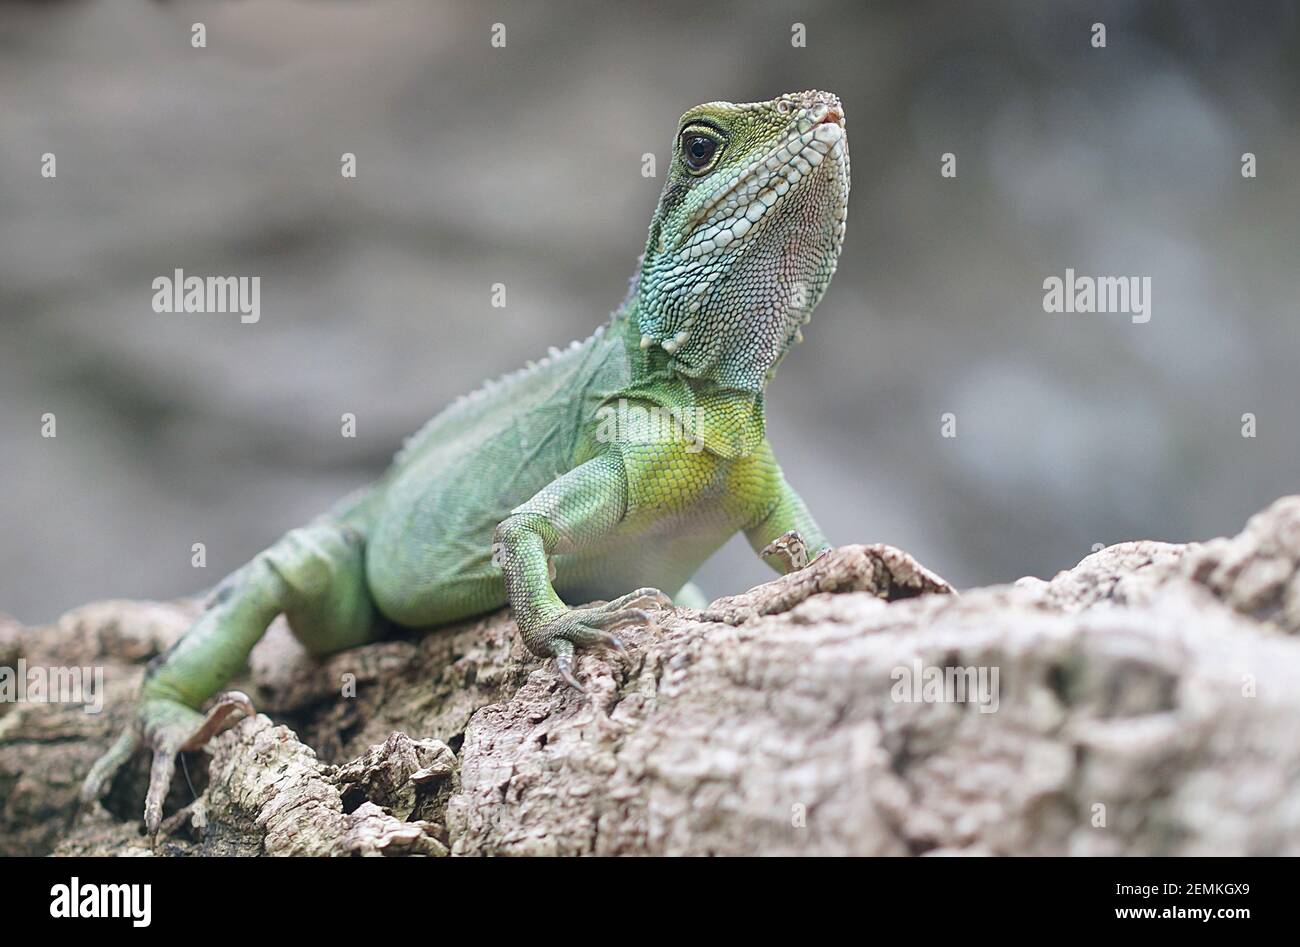 portrait of green iguana, big lizard sitting on tree branch Stock Photo